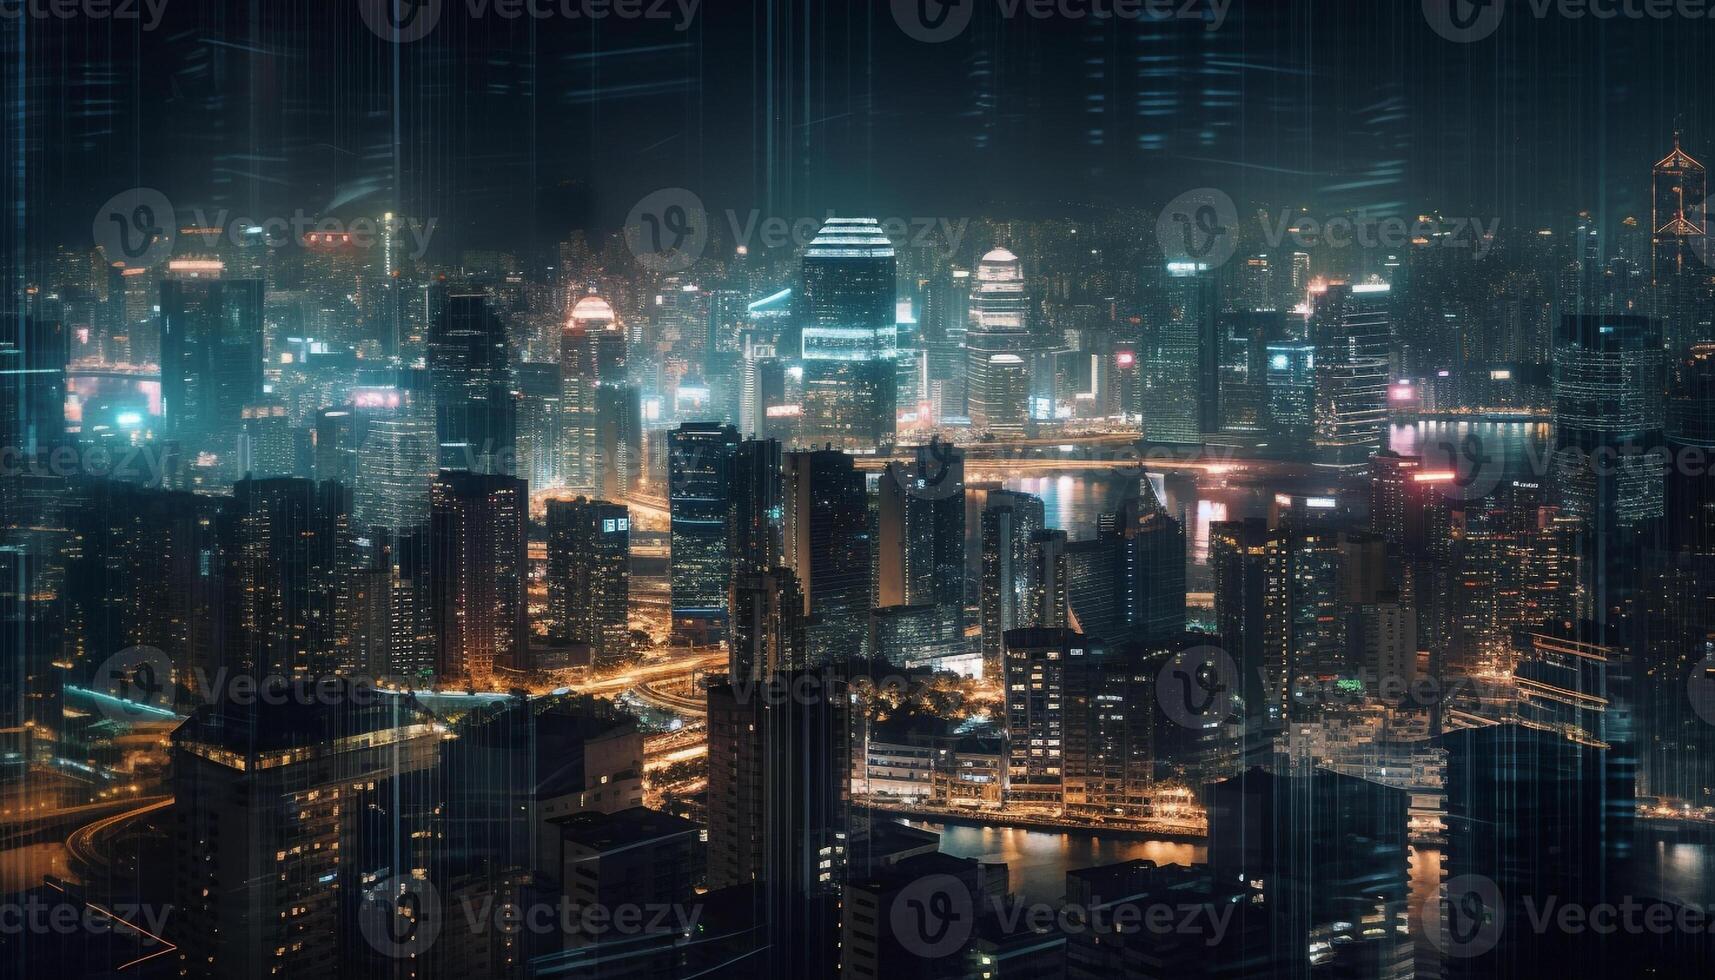 Glowing city skyscrapers illuminate the dark night generated by AI photo